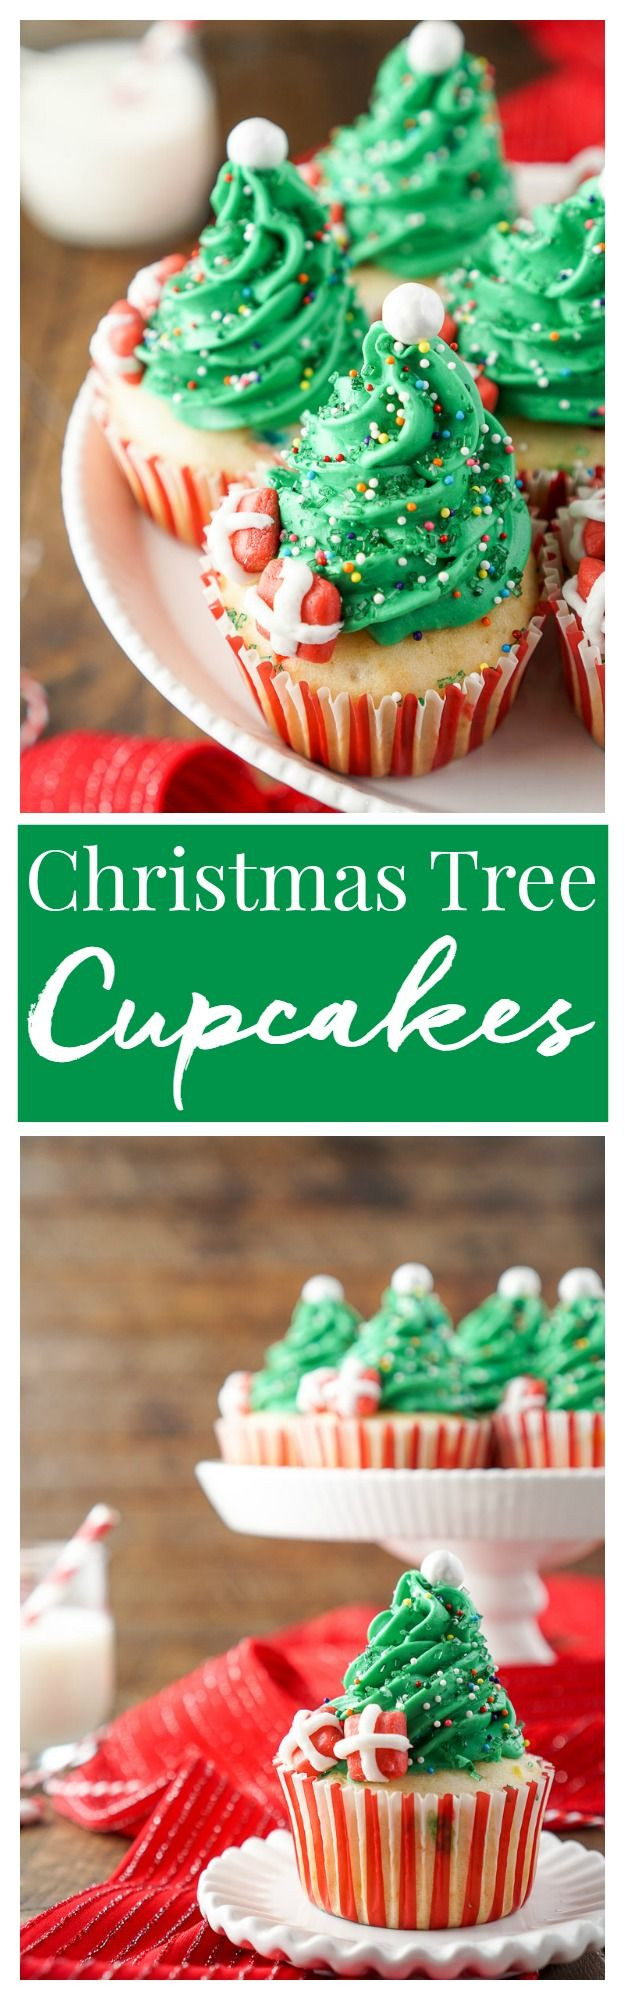 Cute Easy Christmas Desserts
 Best 25 Cute christmas desserts ideas on Pinterest